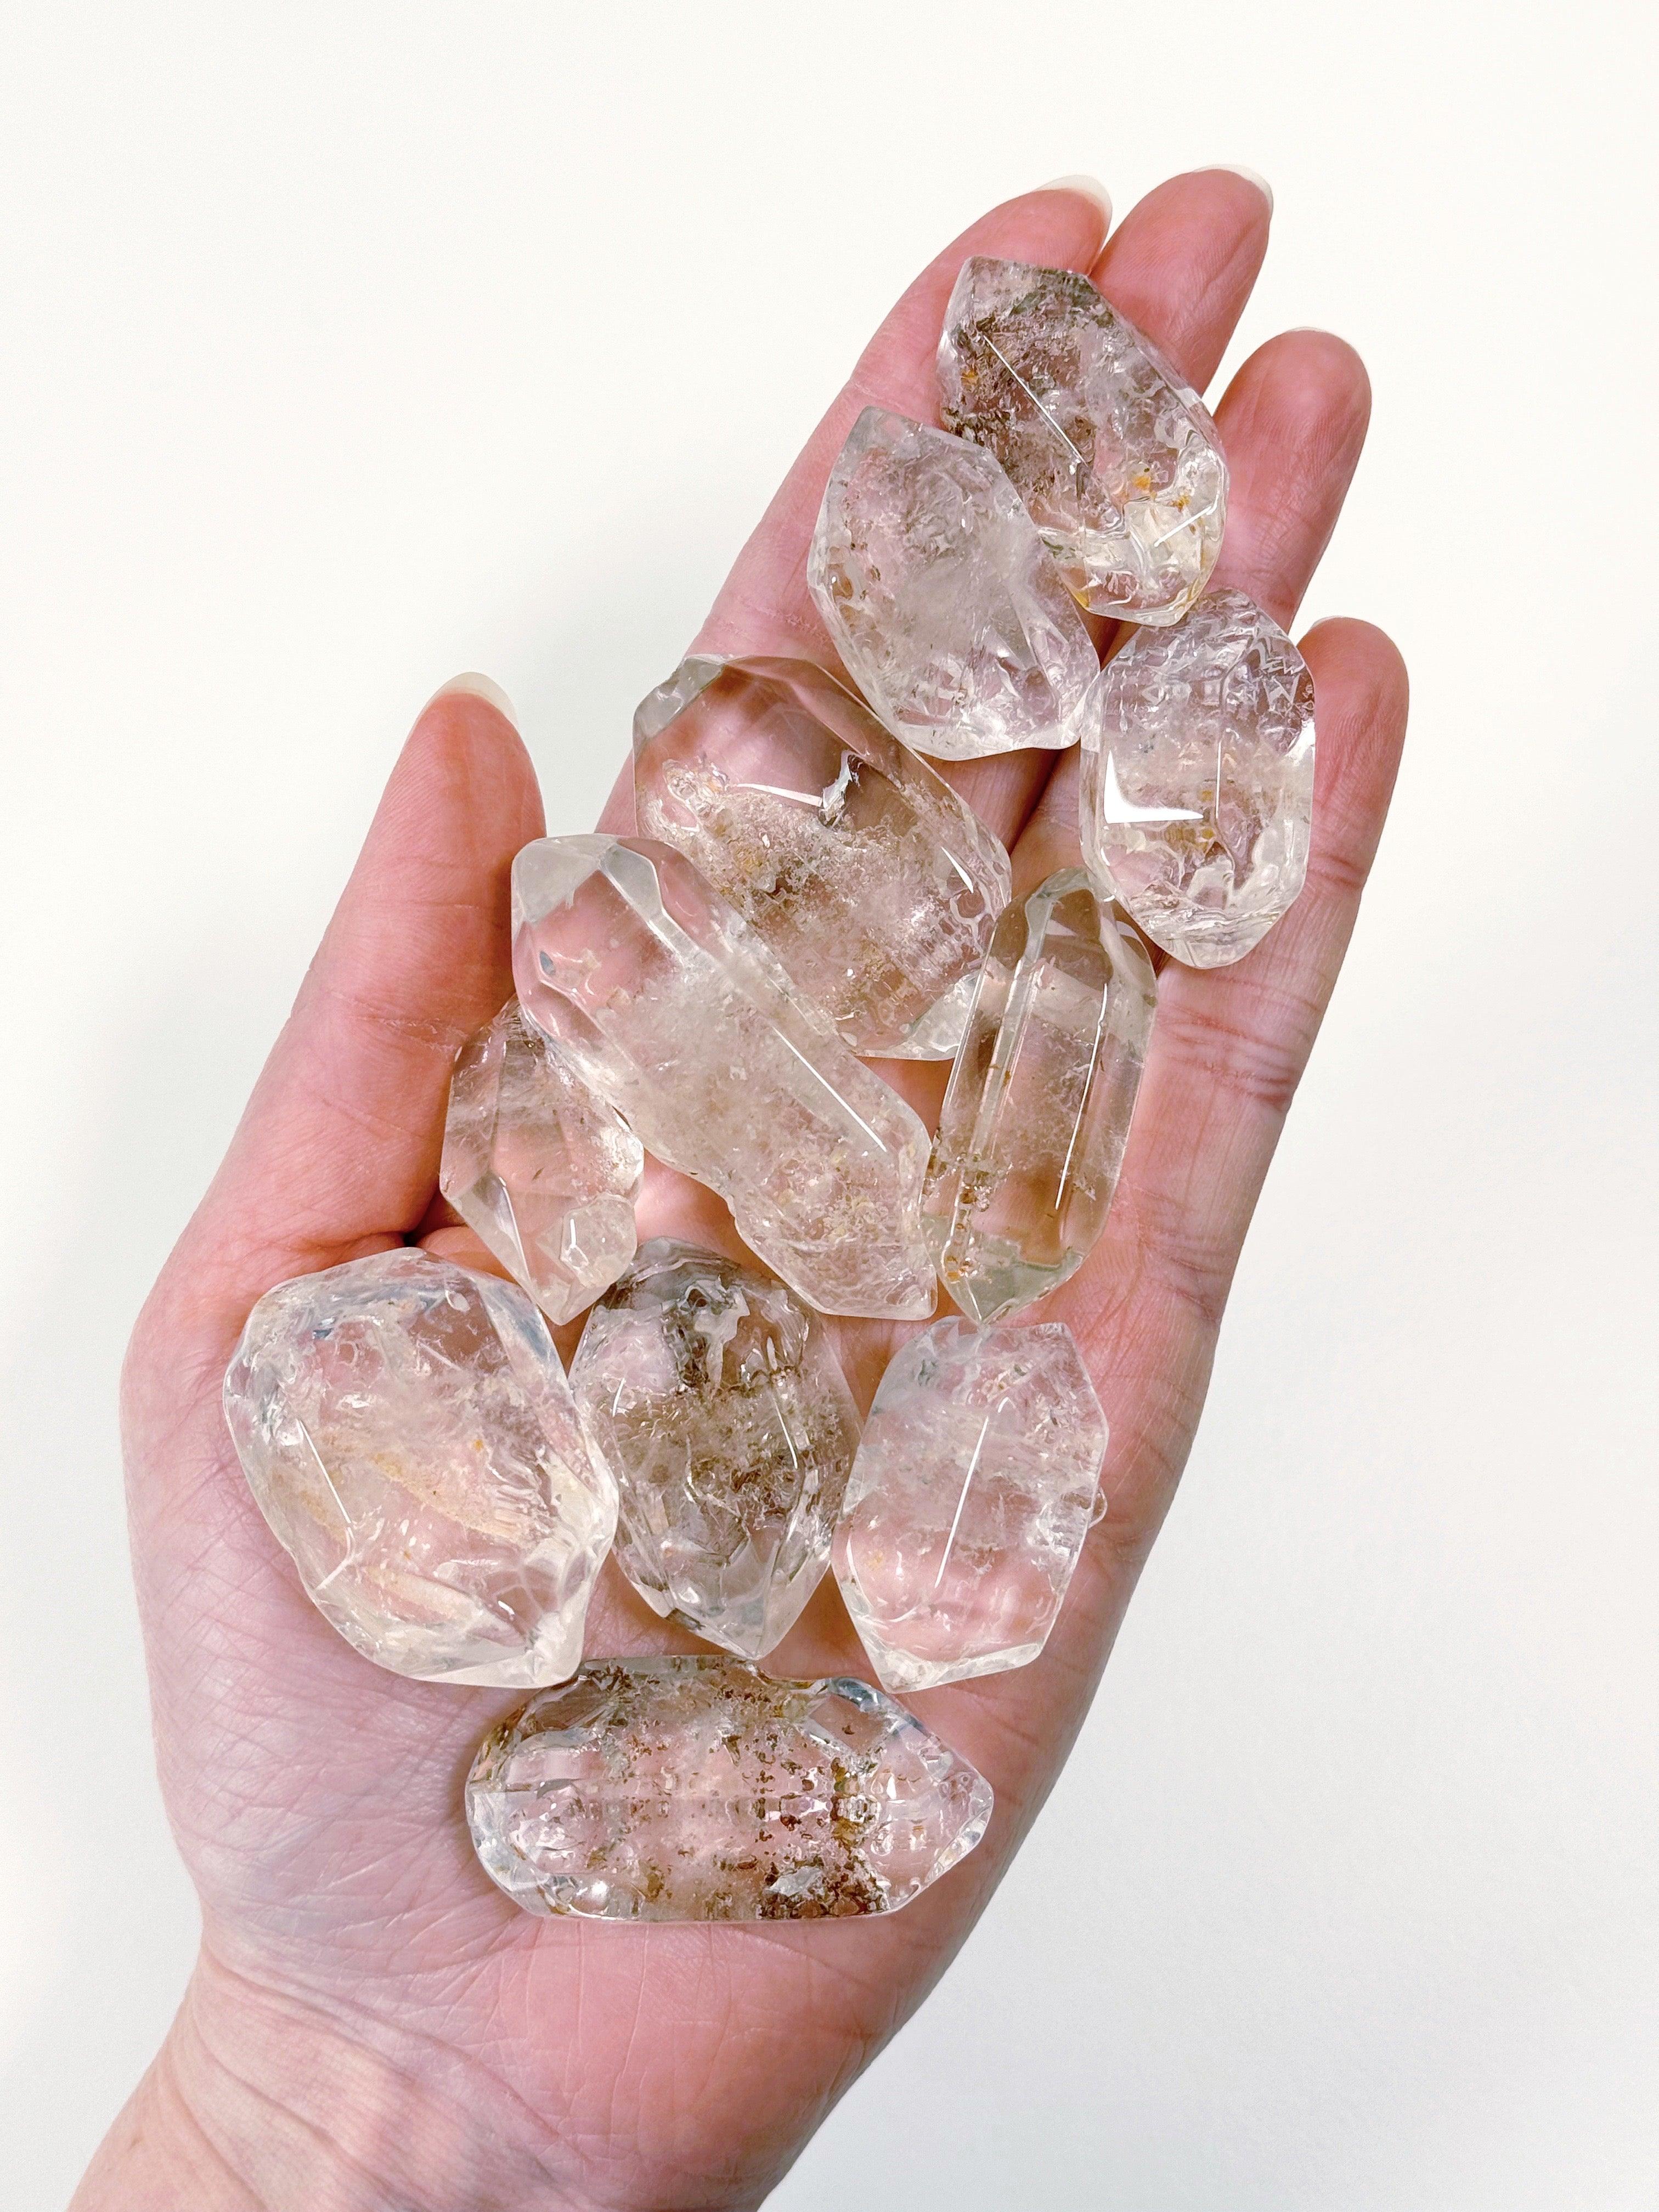 CLEAR QUARTZ POINT TUMBLE - clear quartz, crystals for community, pocket crystal, pocket crystals, pocket stone, quartz, recently added, tumble, tumbled, tumbled stone, tumbles - The Mineral Maven